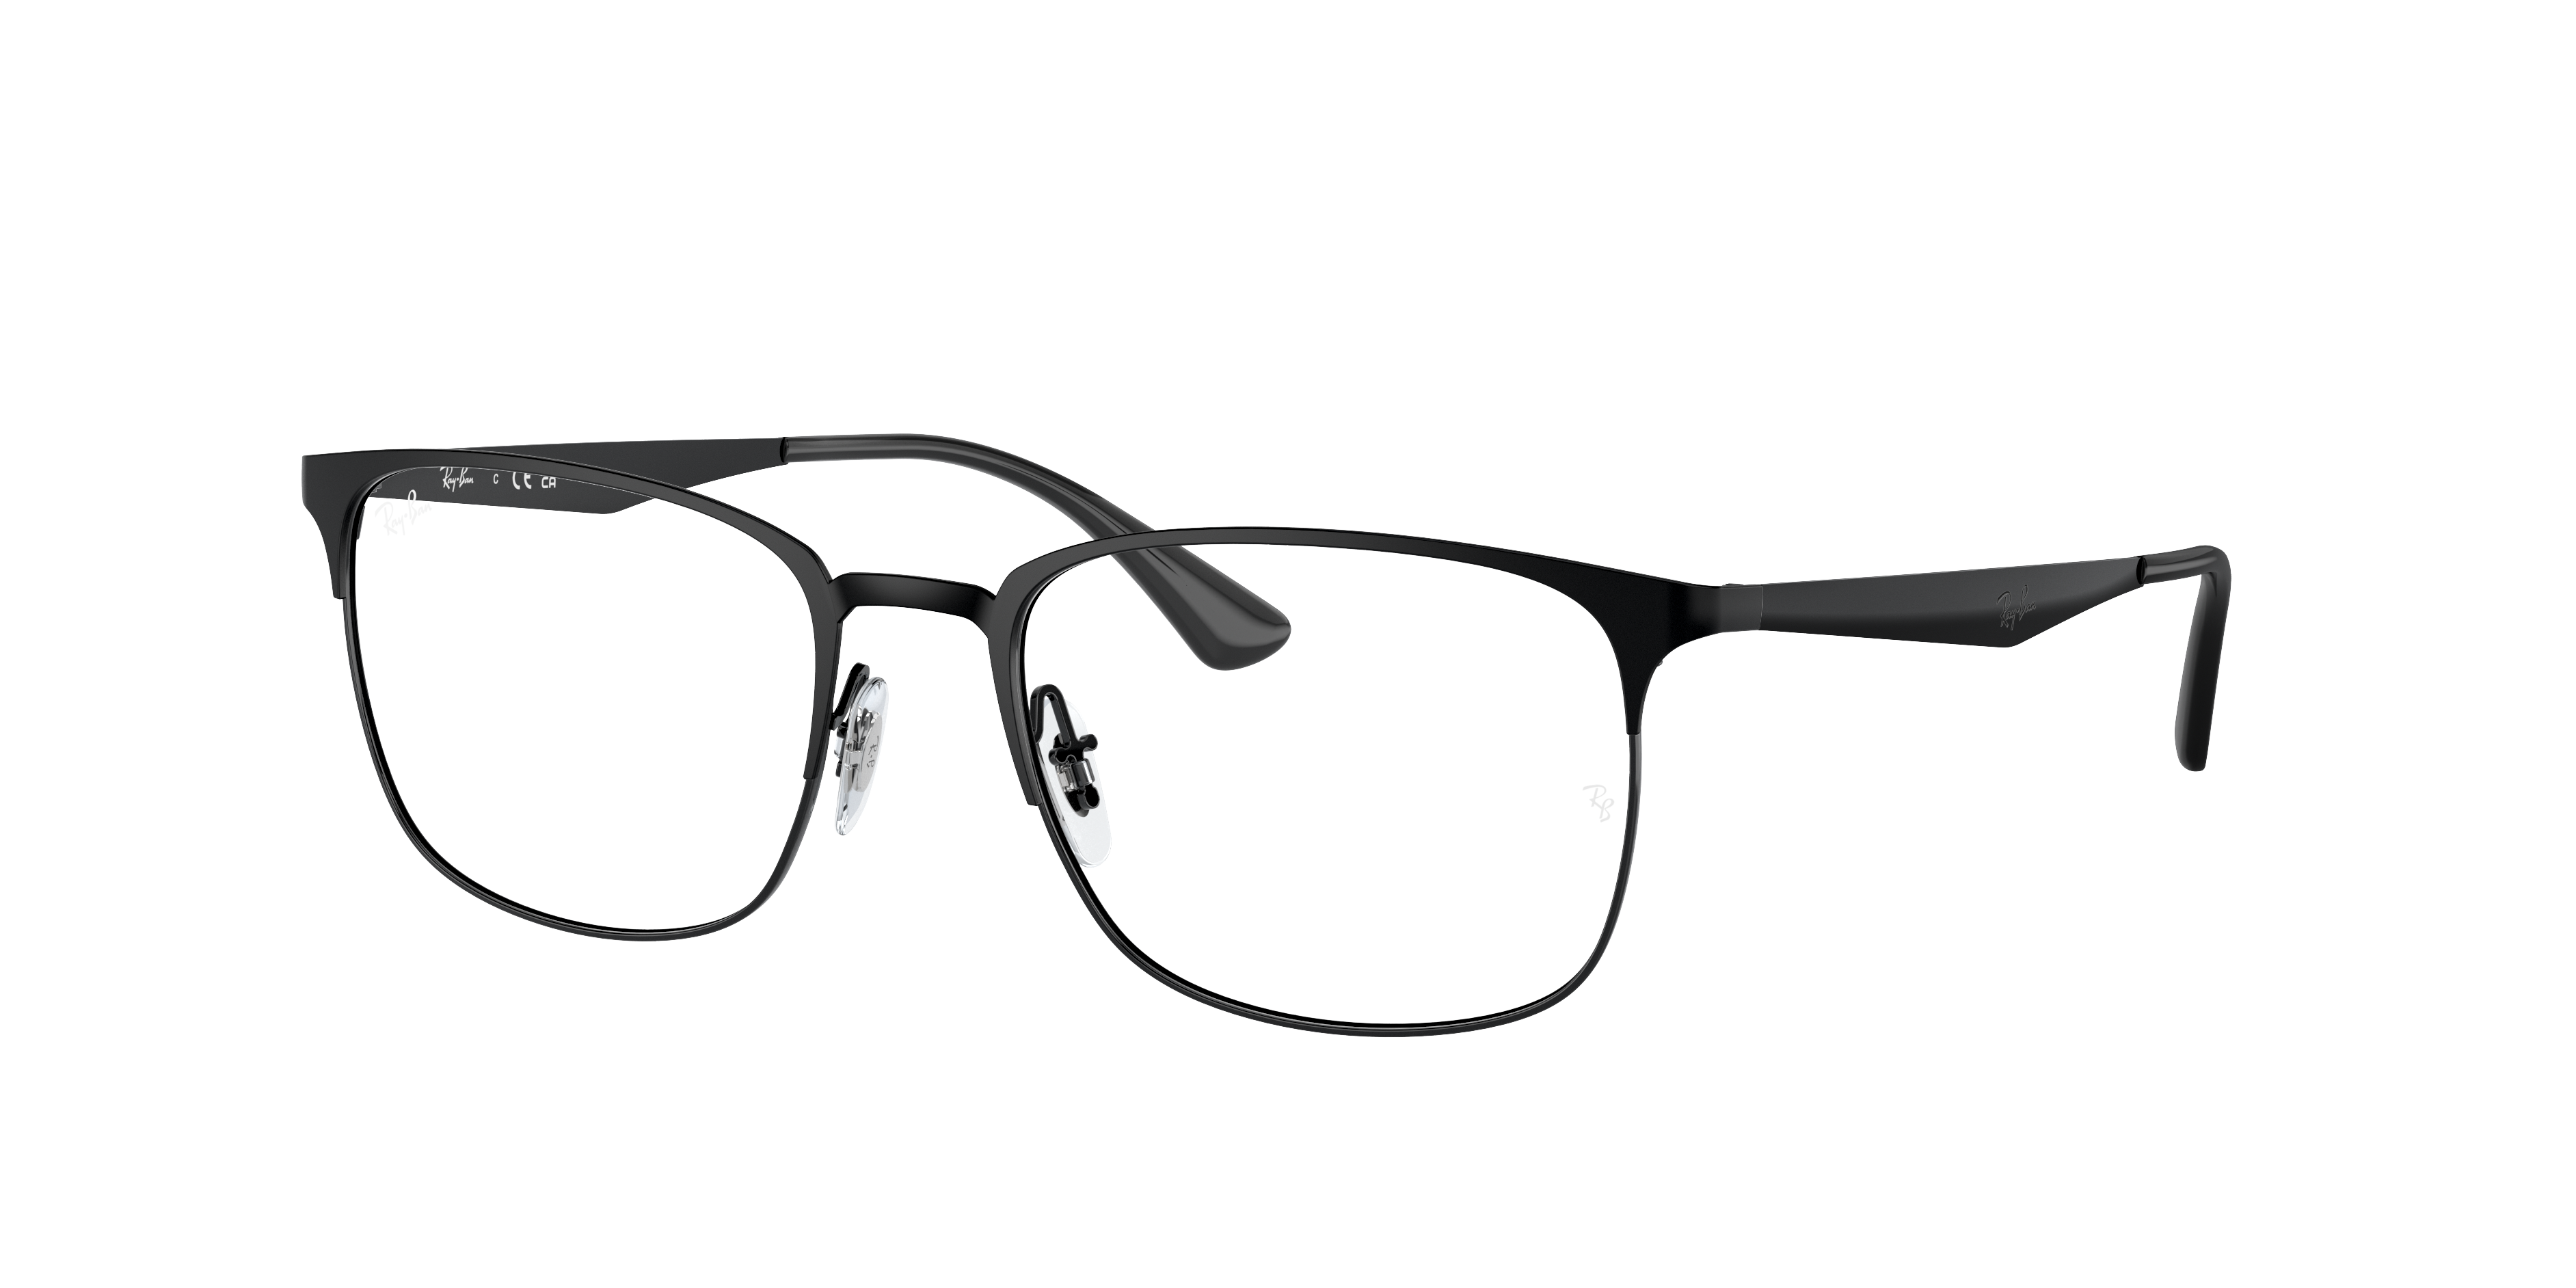 Rb6421 Optics Eyeglasses with Black Frame - RB6421 | Ray-Ban® US